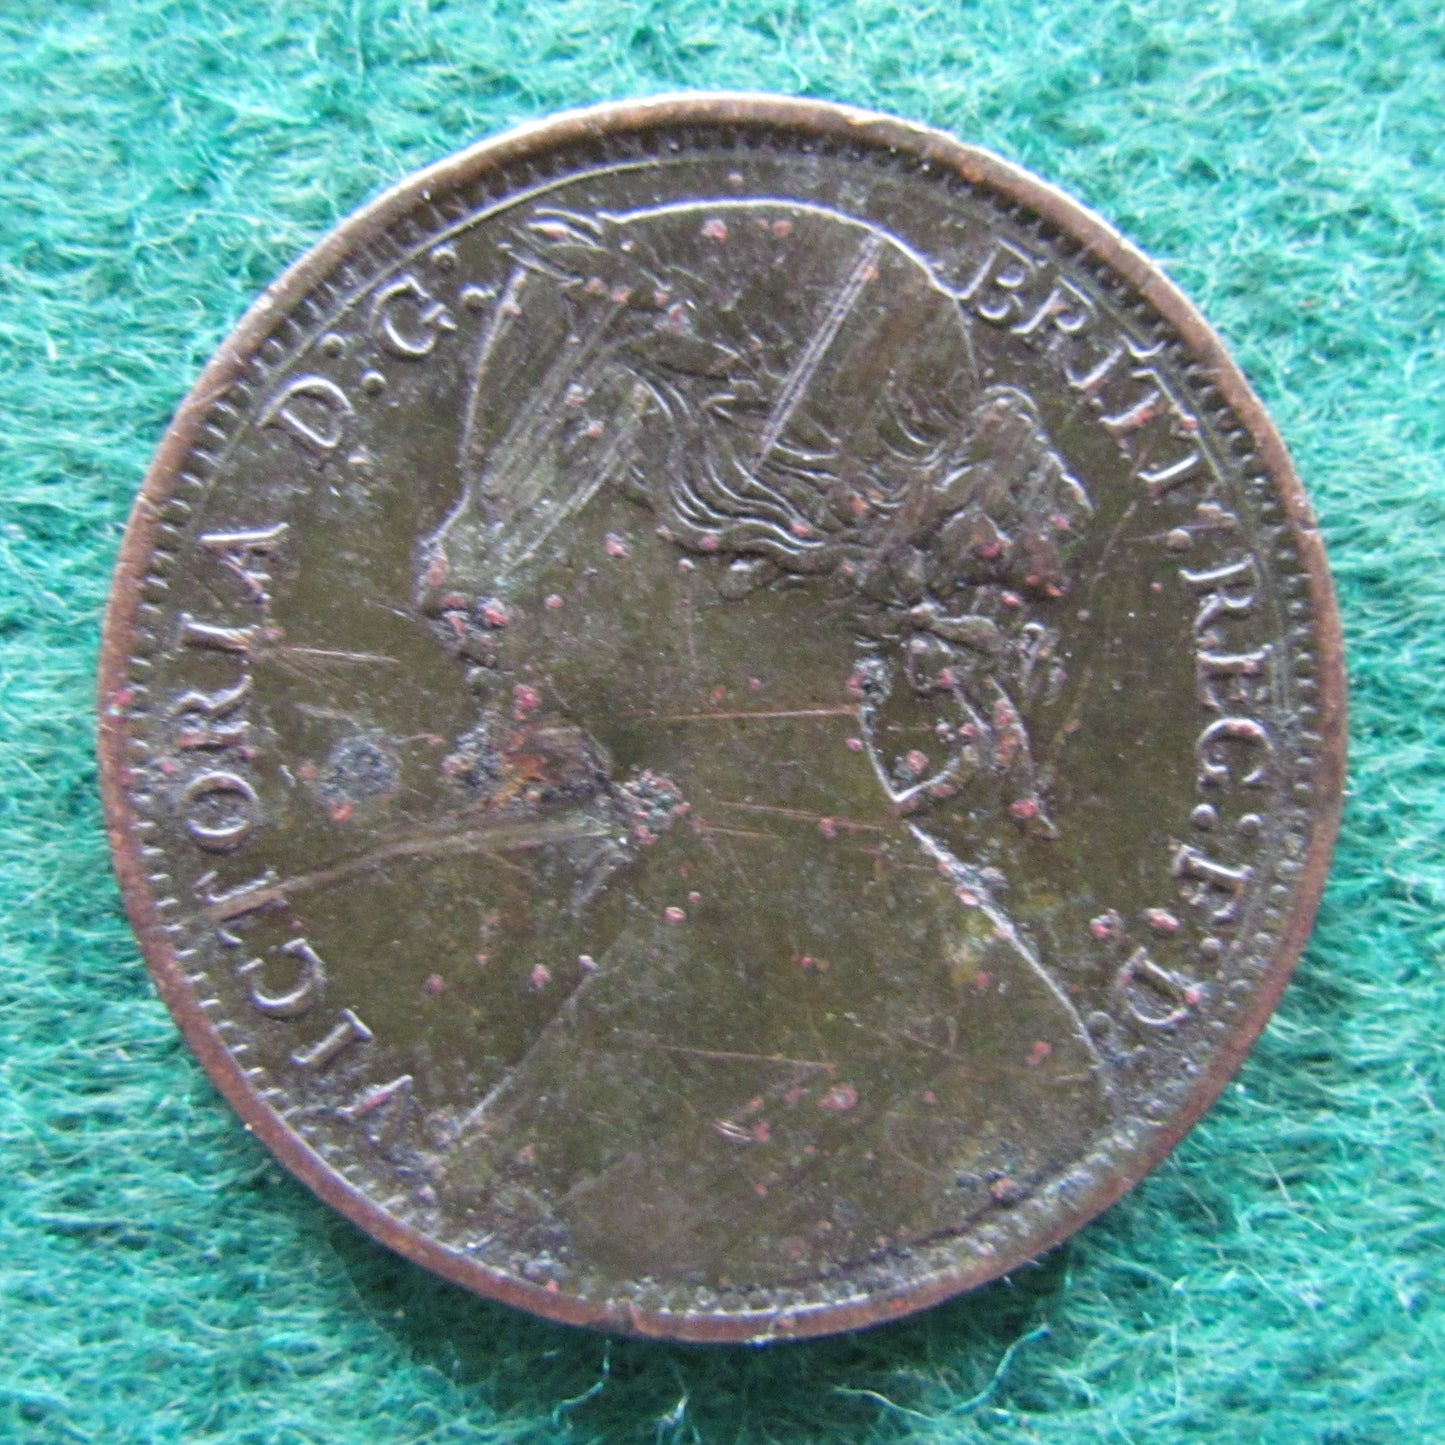 GB British UK English 1865 Penny Queen Victoria Coin - Bun Head